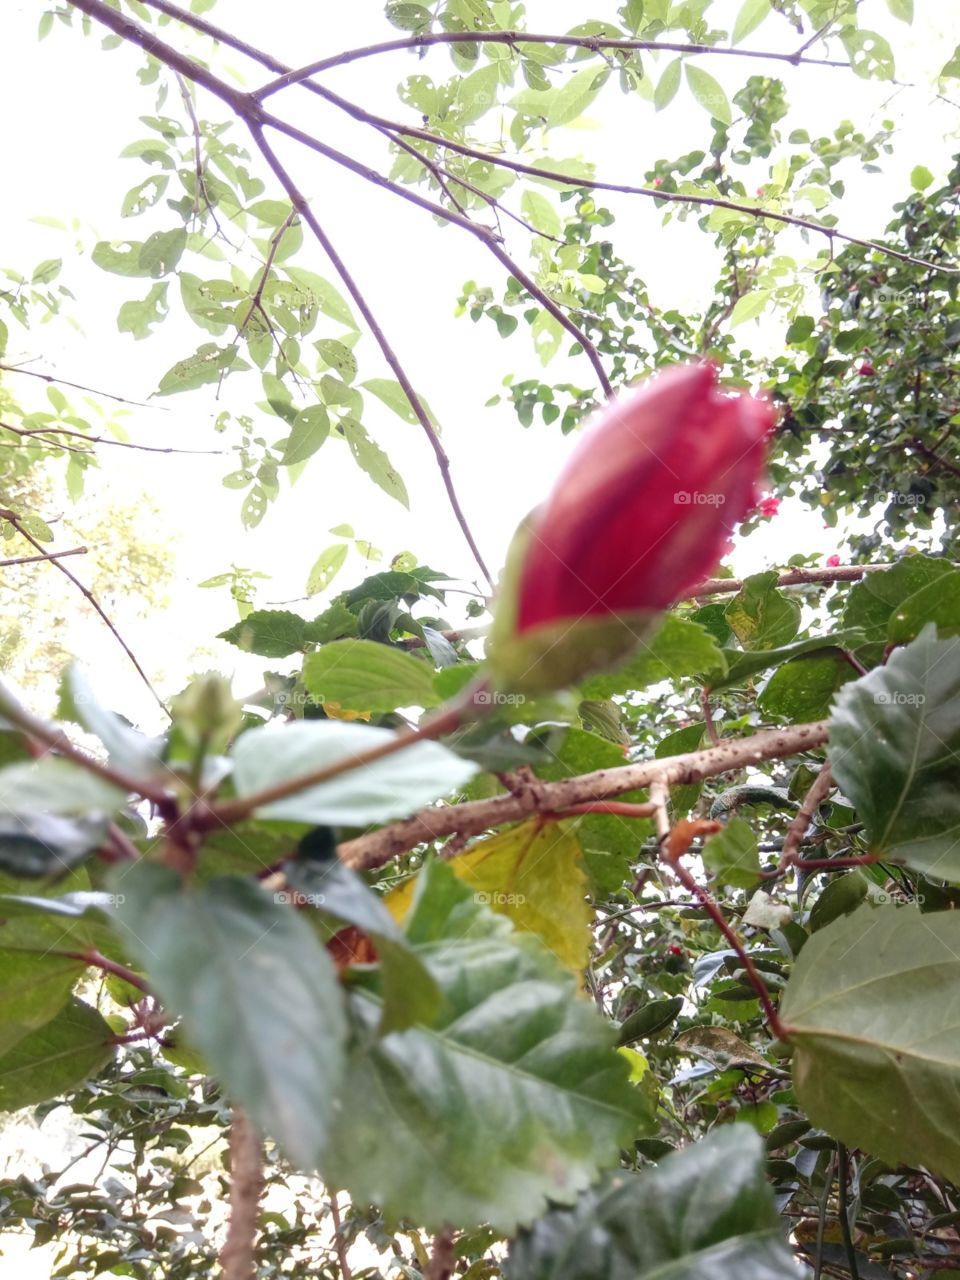 Red Bud
Hibiscus 'S Bud
flower